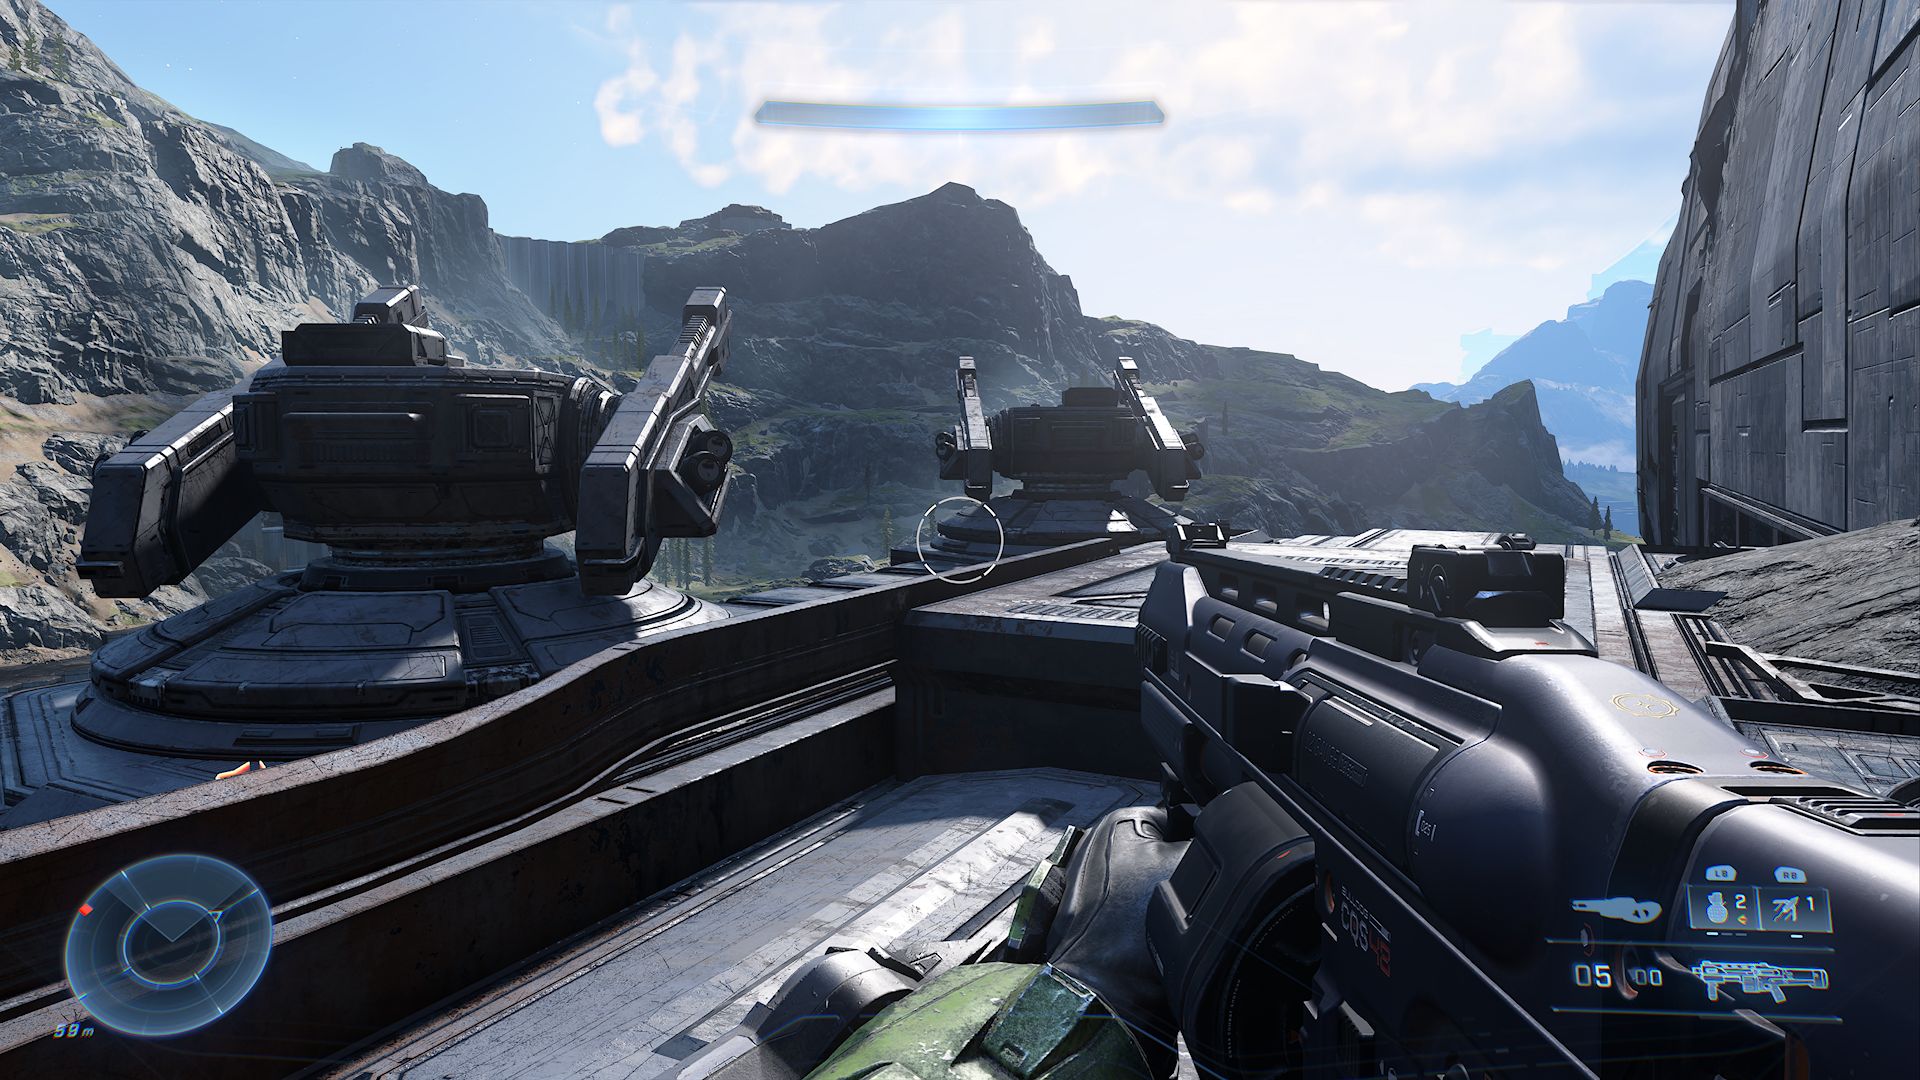 Halo Infinite Scorpion Gun location: How to get it?